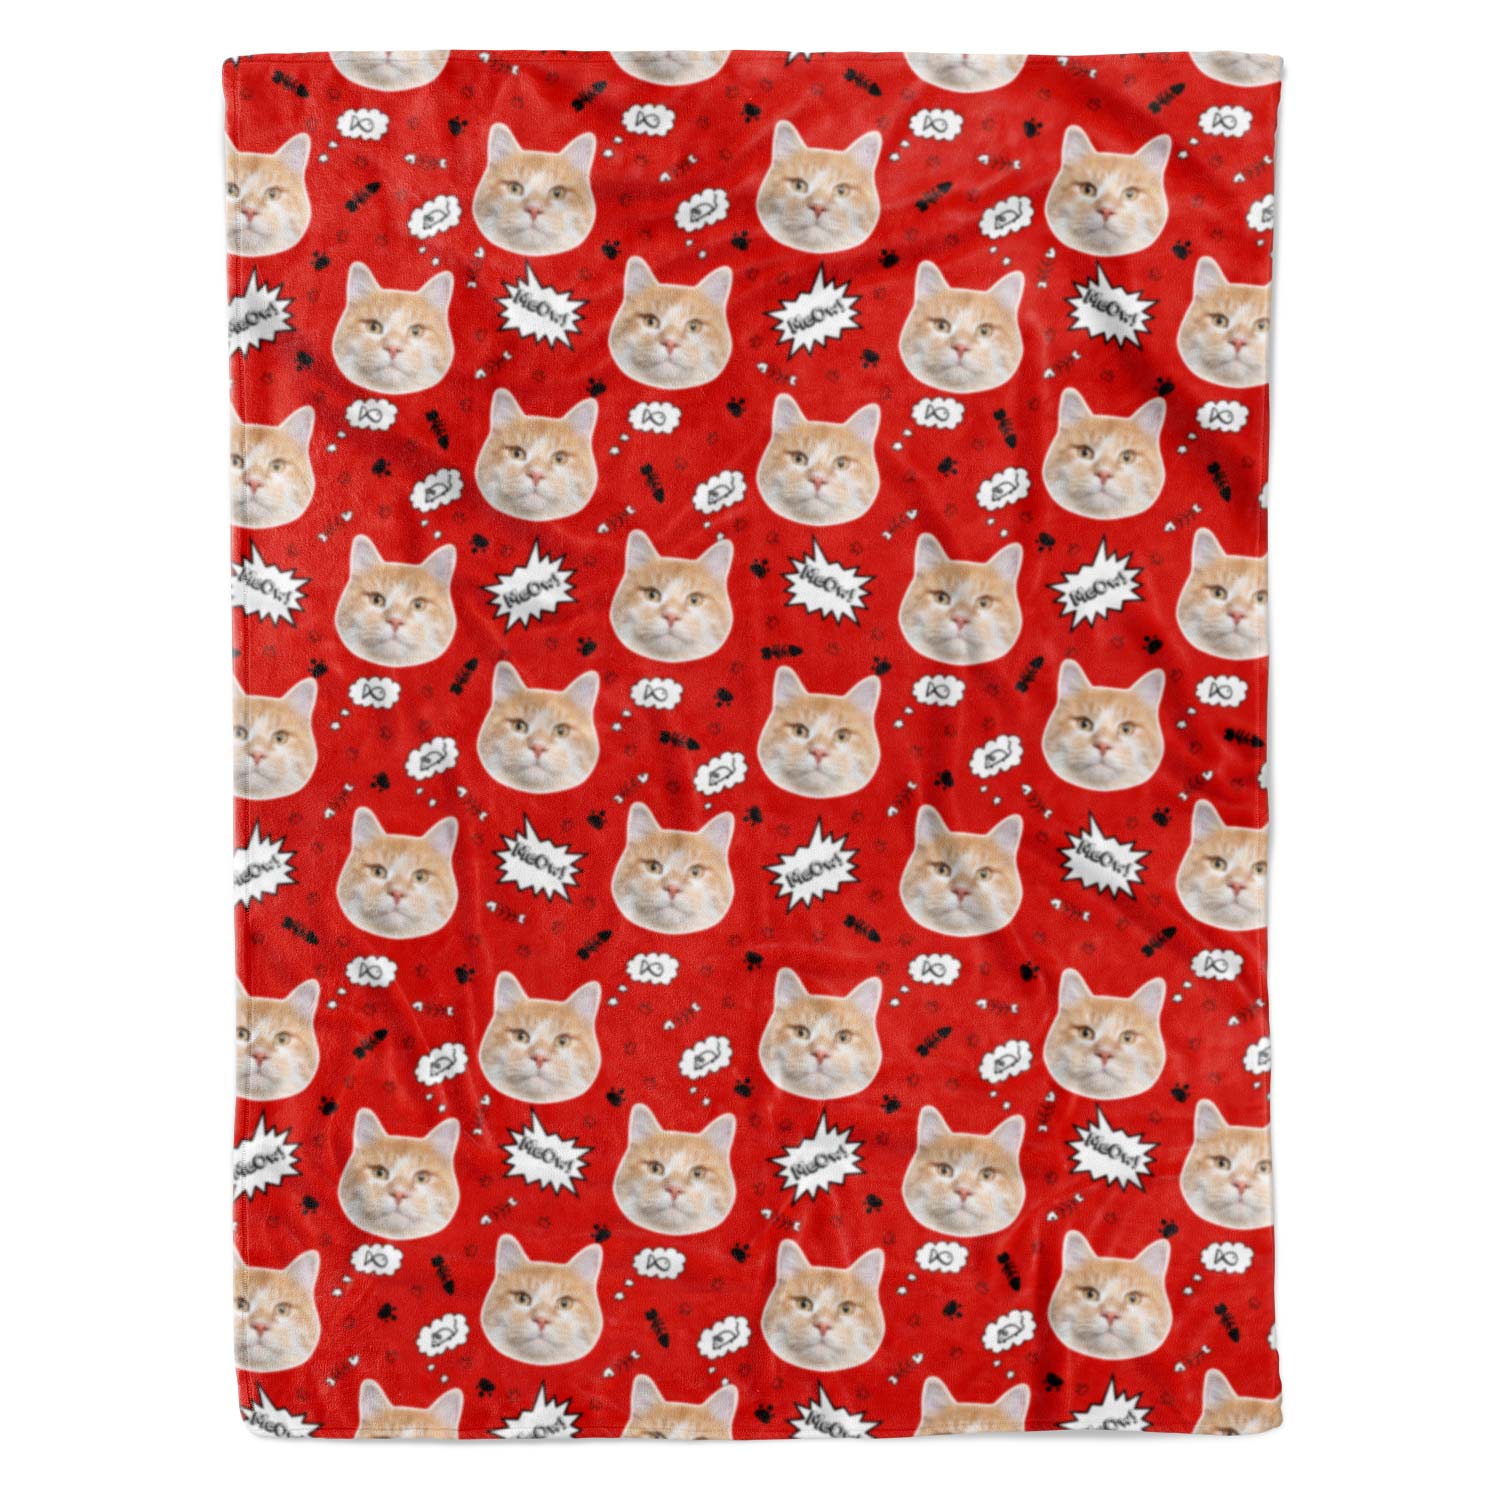 Meow Cat Personalised Blanket